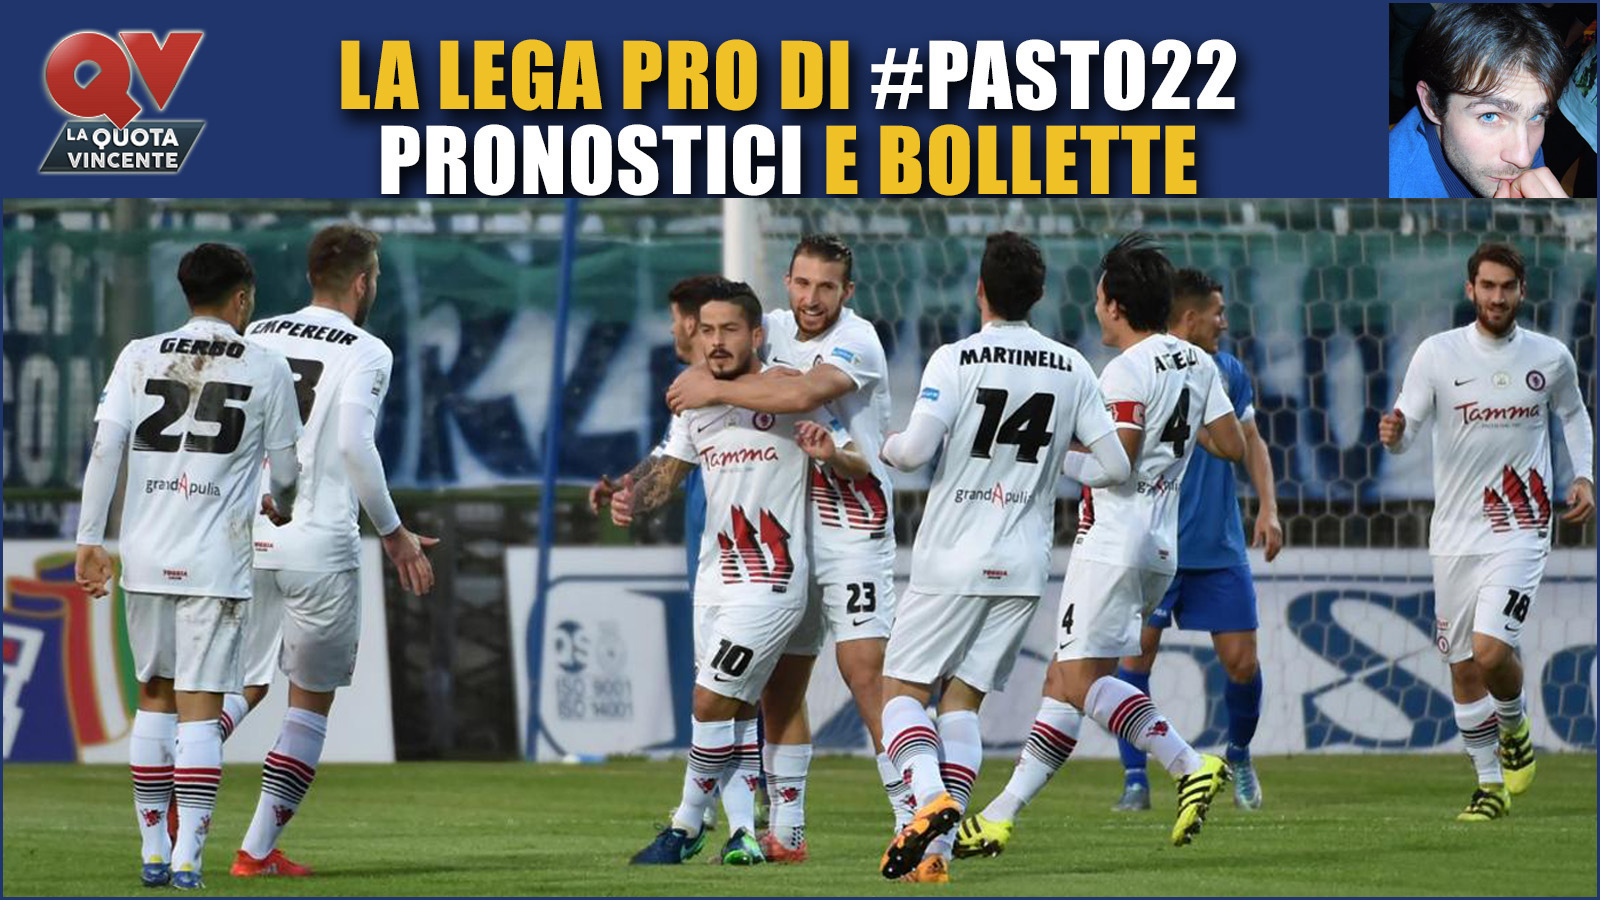 blog_lega_pro_pasto_22_foggia_calcio